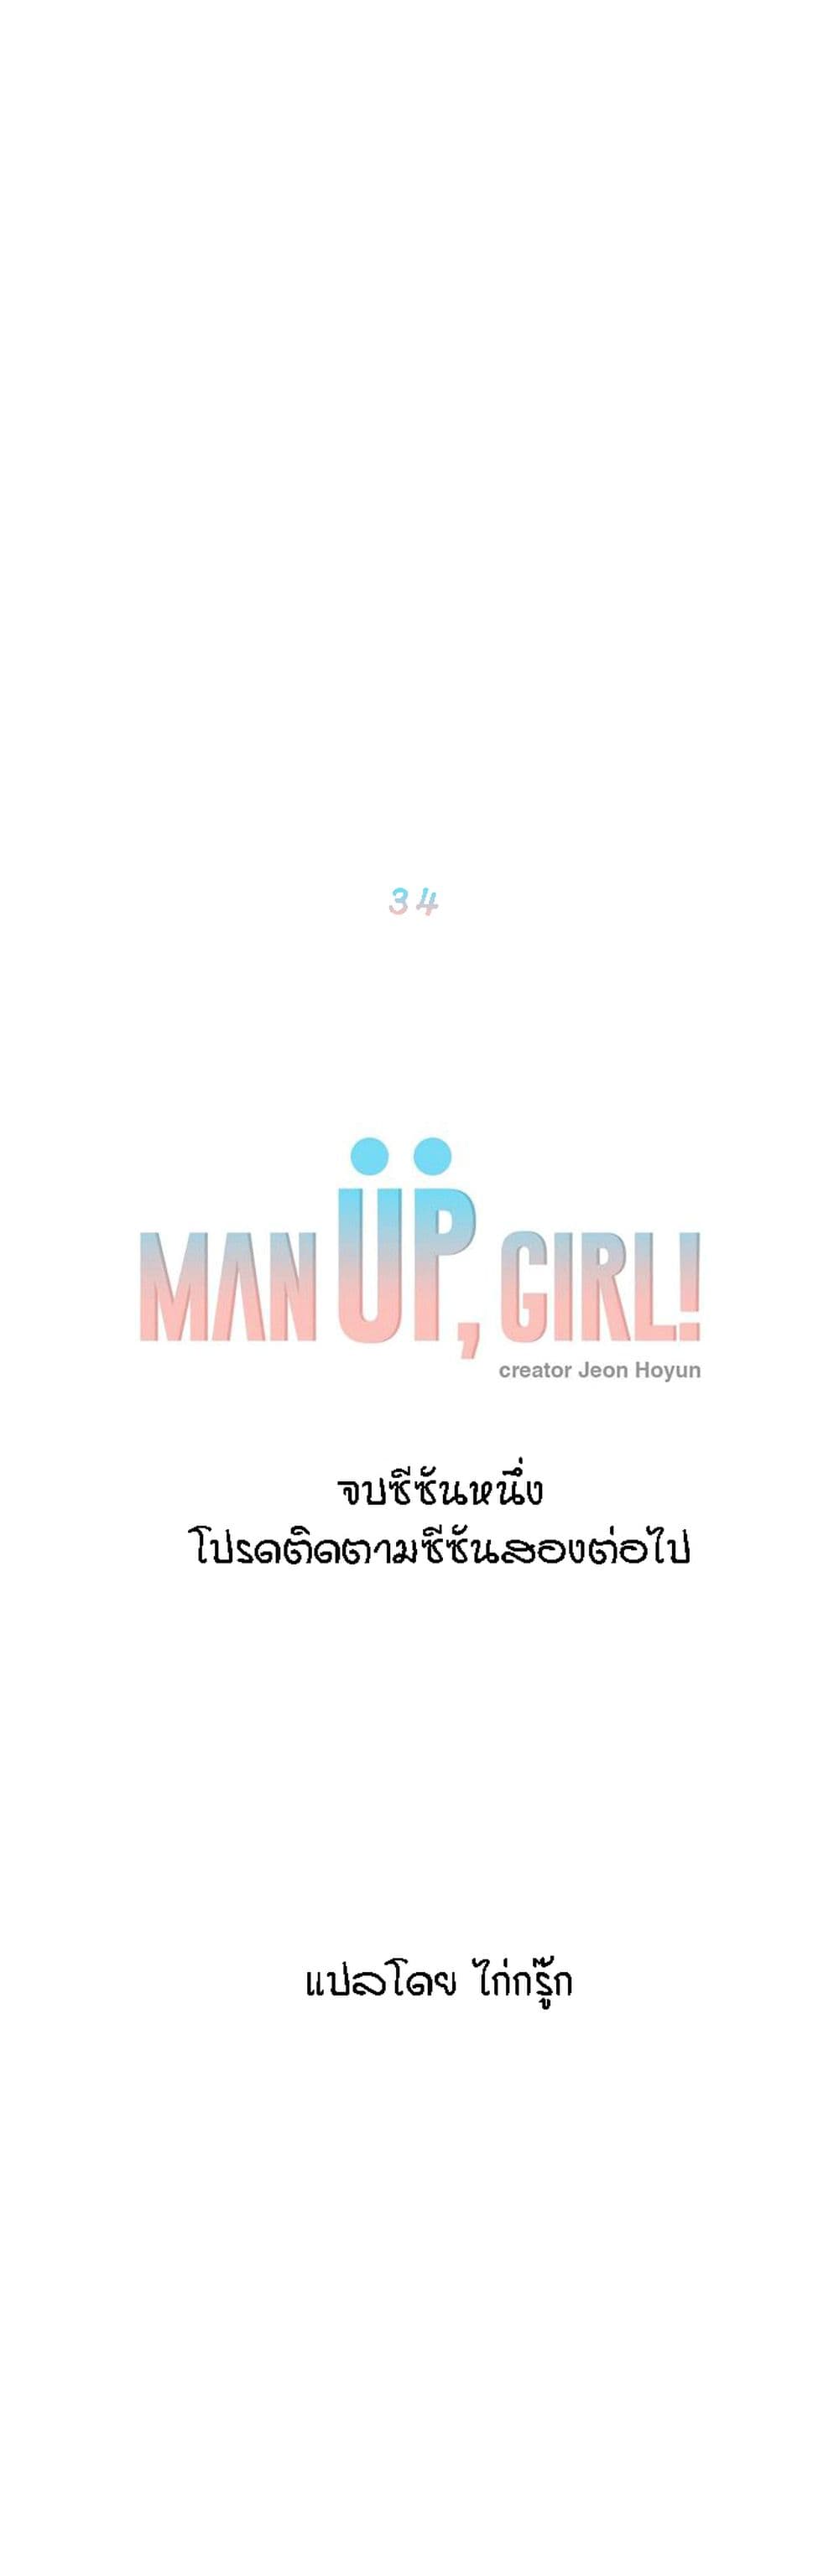 Man Up Girl 34-34